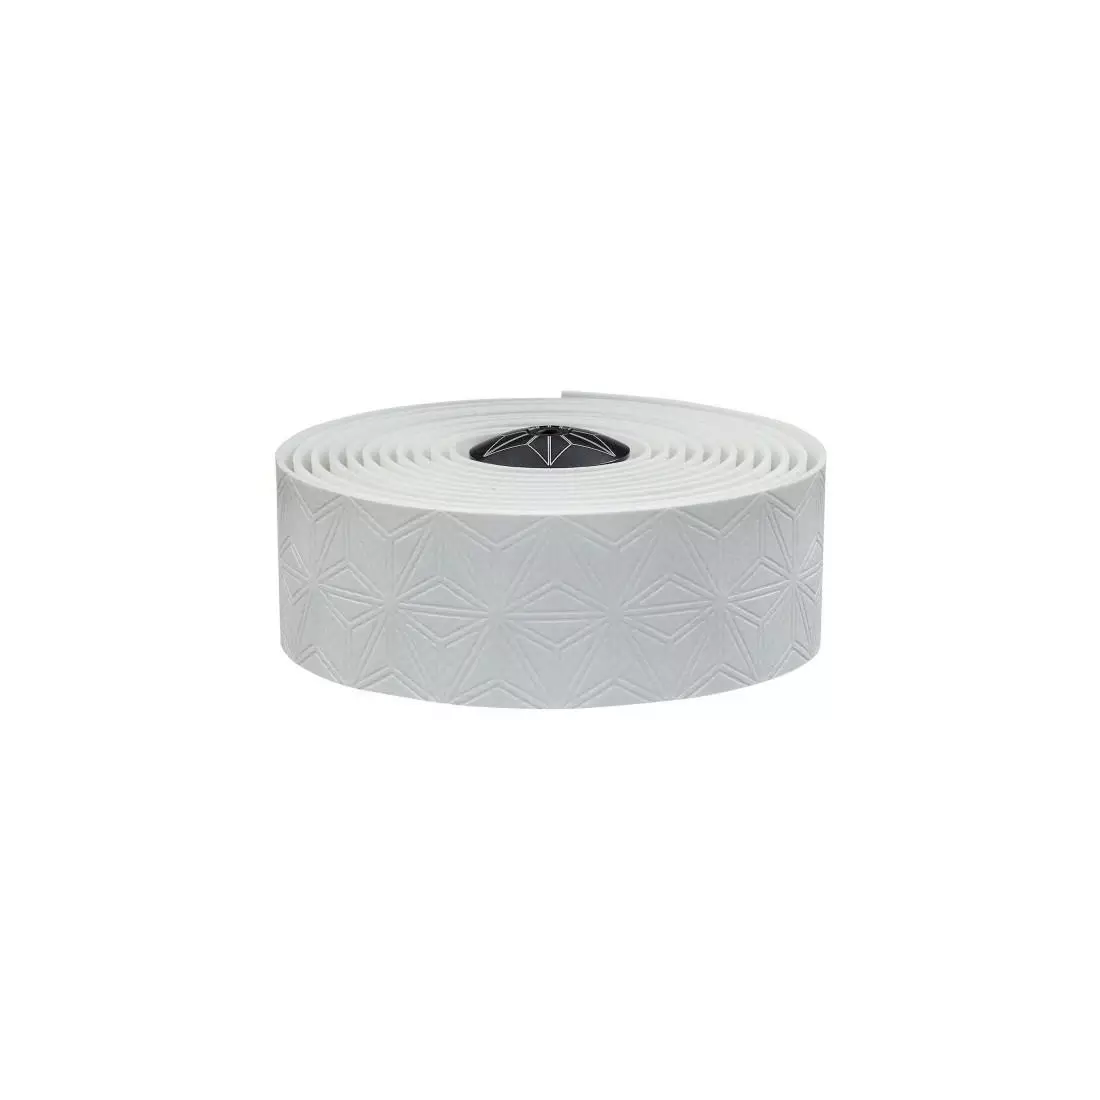 SUPACAZ BT-02 handlebar tape SUPER STICKY KUSH White